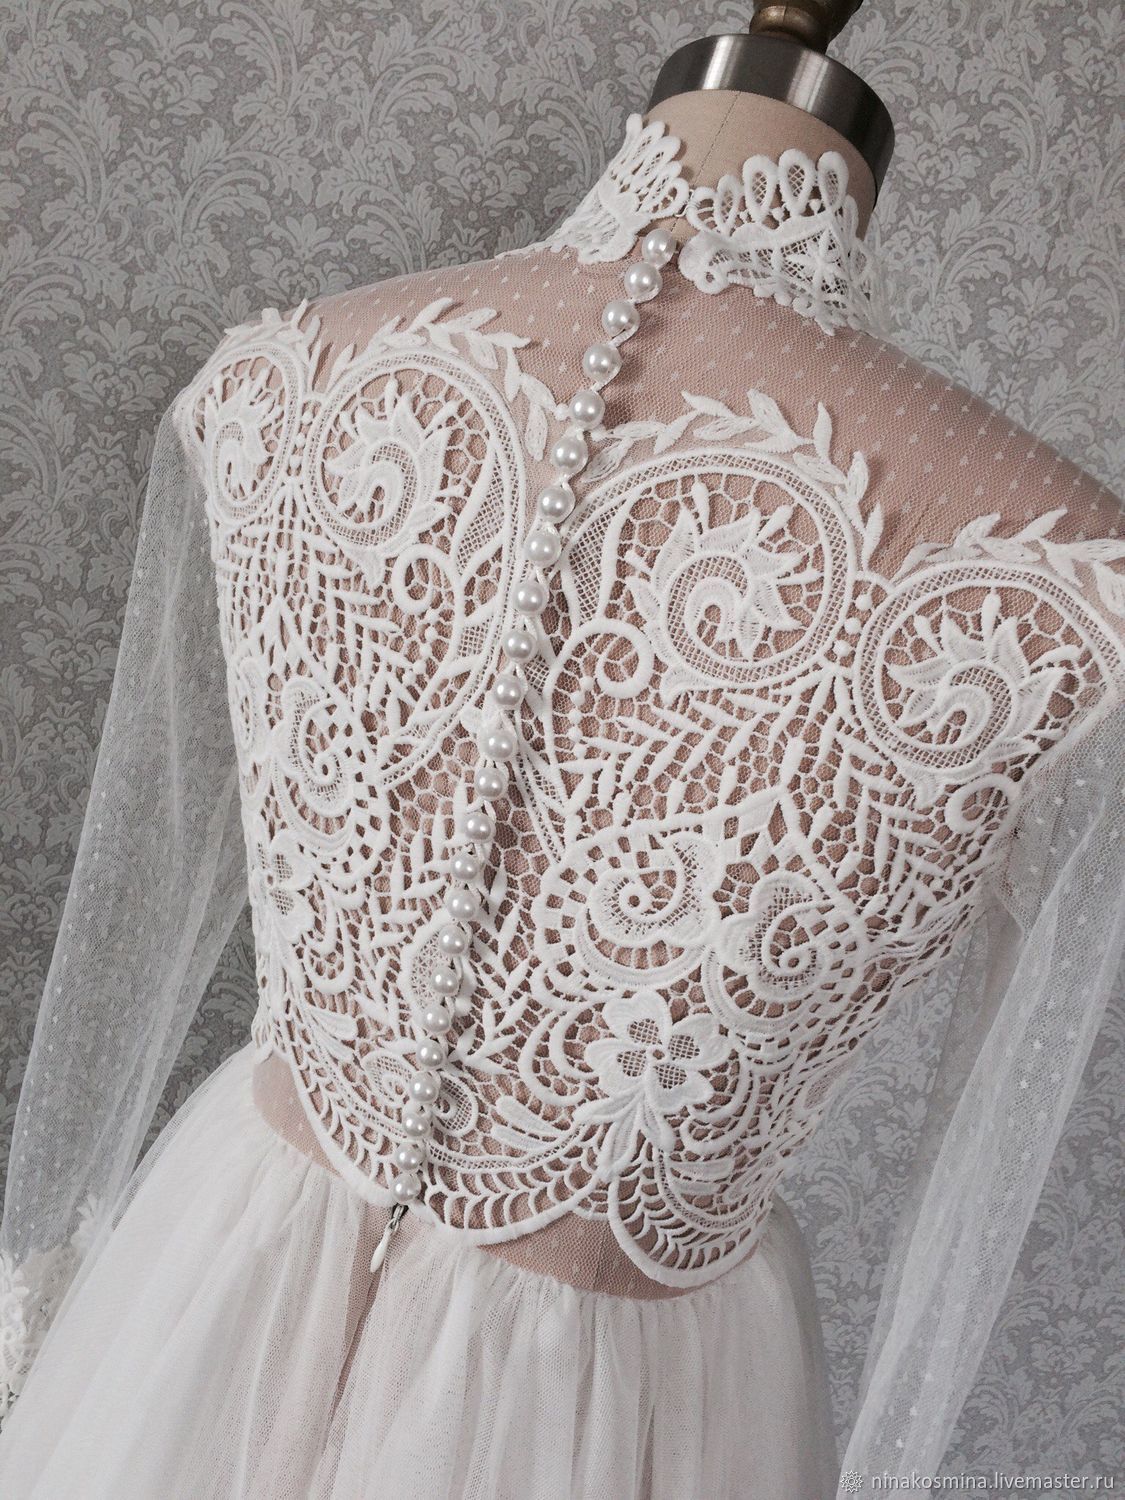 Boho wedding dress for Alena, Wedding dresses, Vologda,  Фото №1